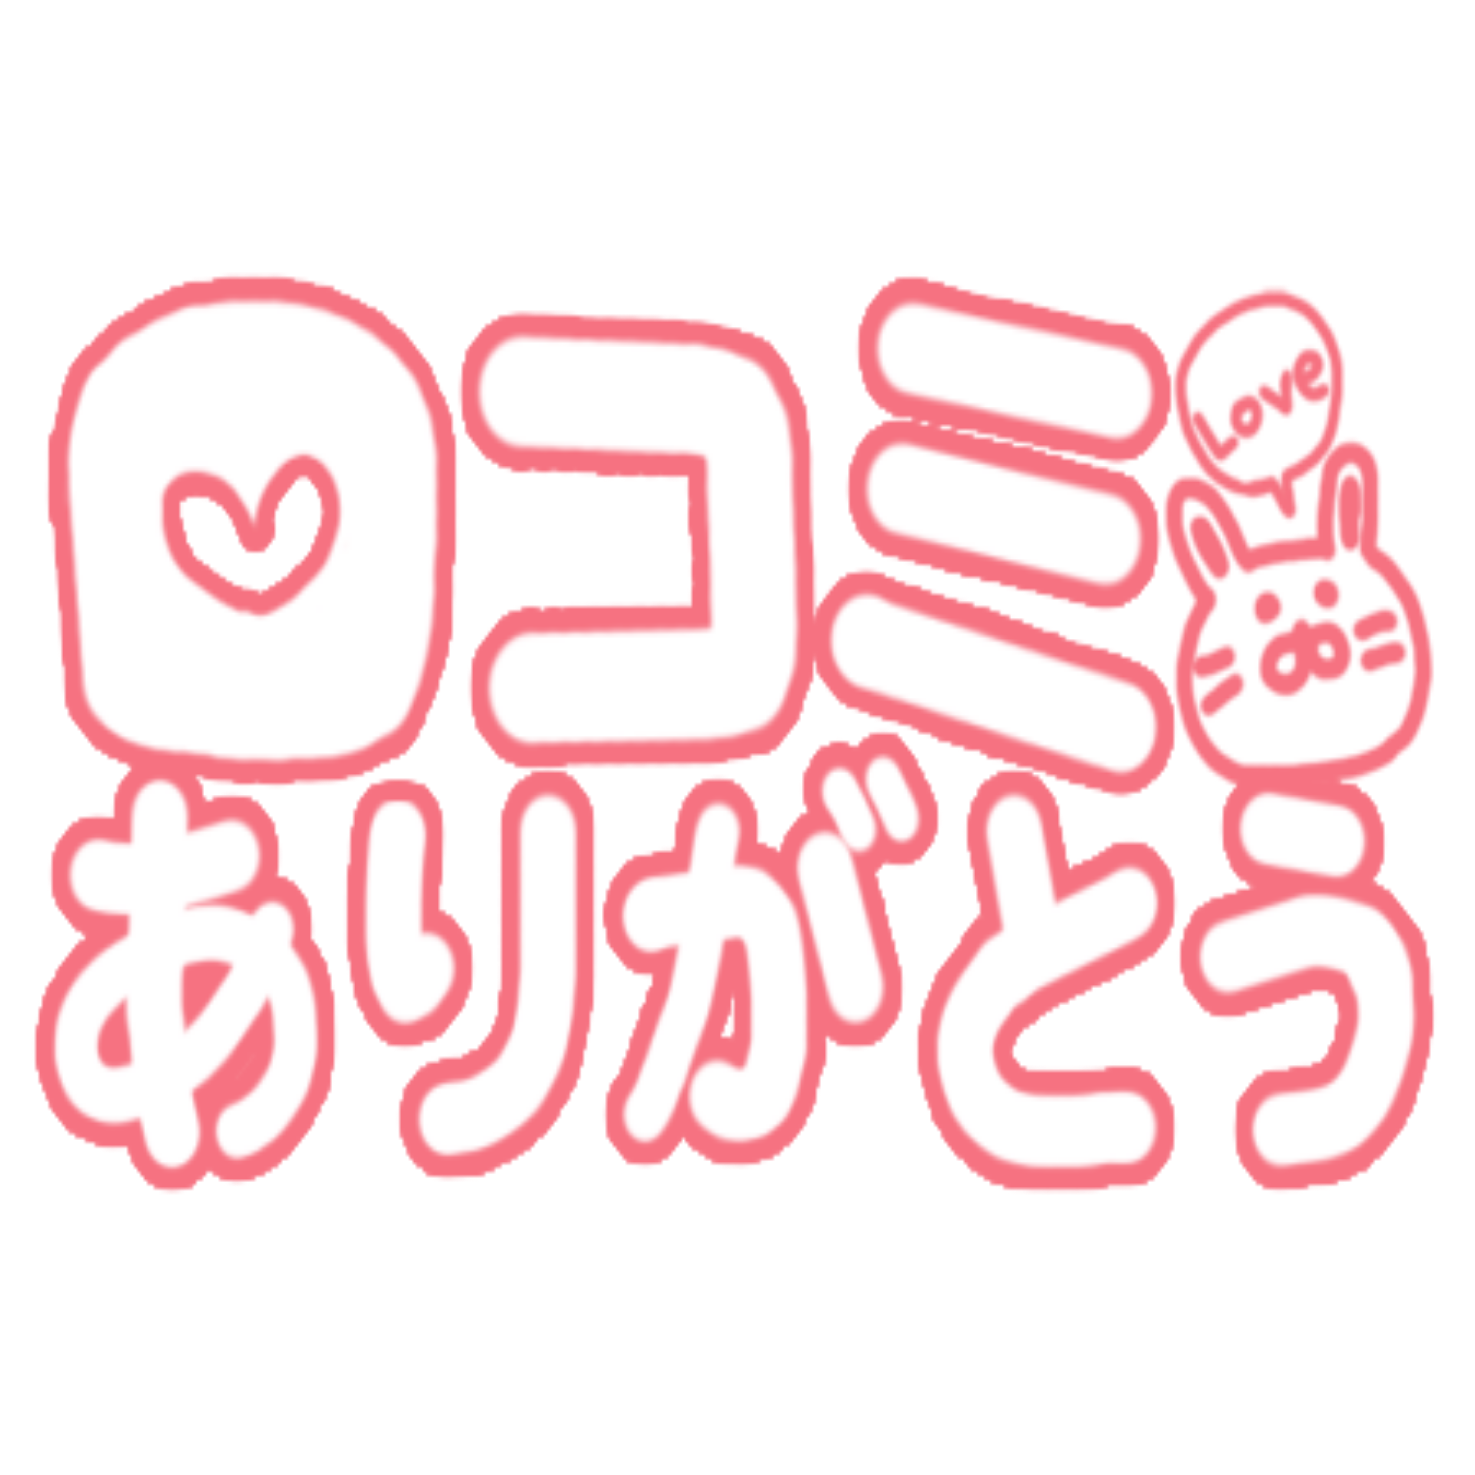 <img class="emojione" alt="🗨️" title=":speech_left:" src="https://fuzoku.jp/assets/img/emojione/1f5e8.png"/>